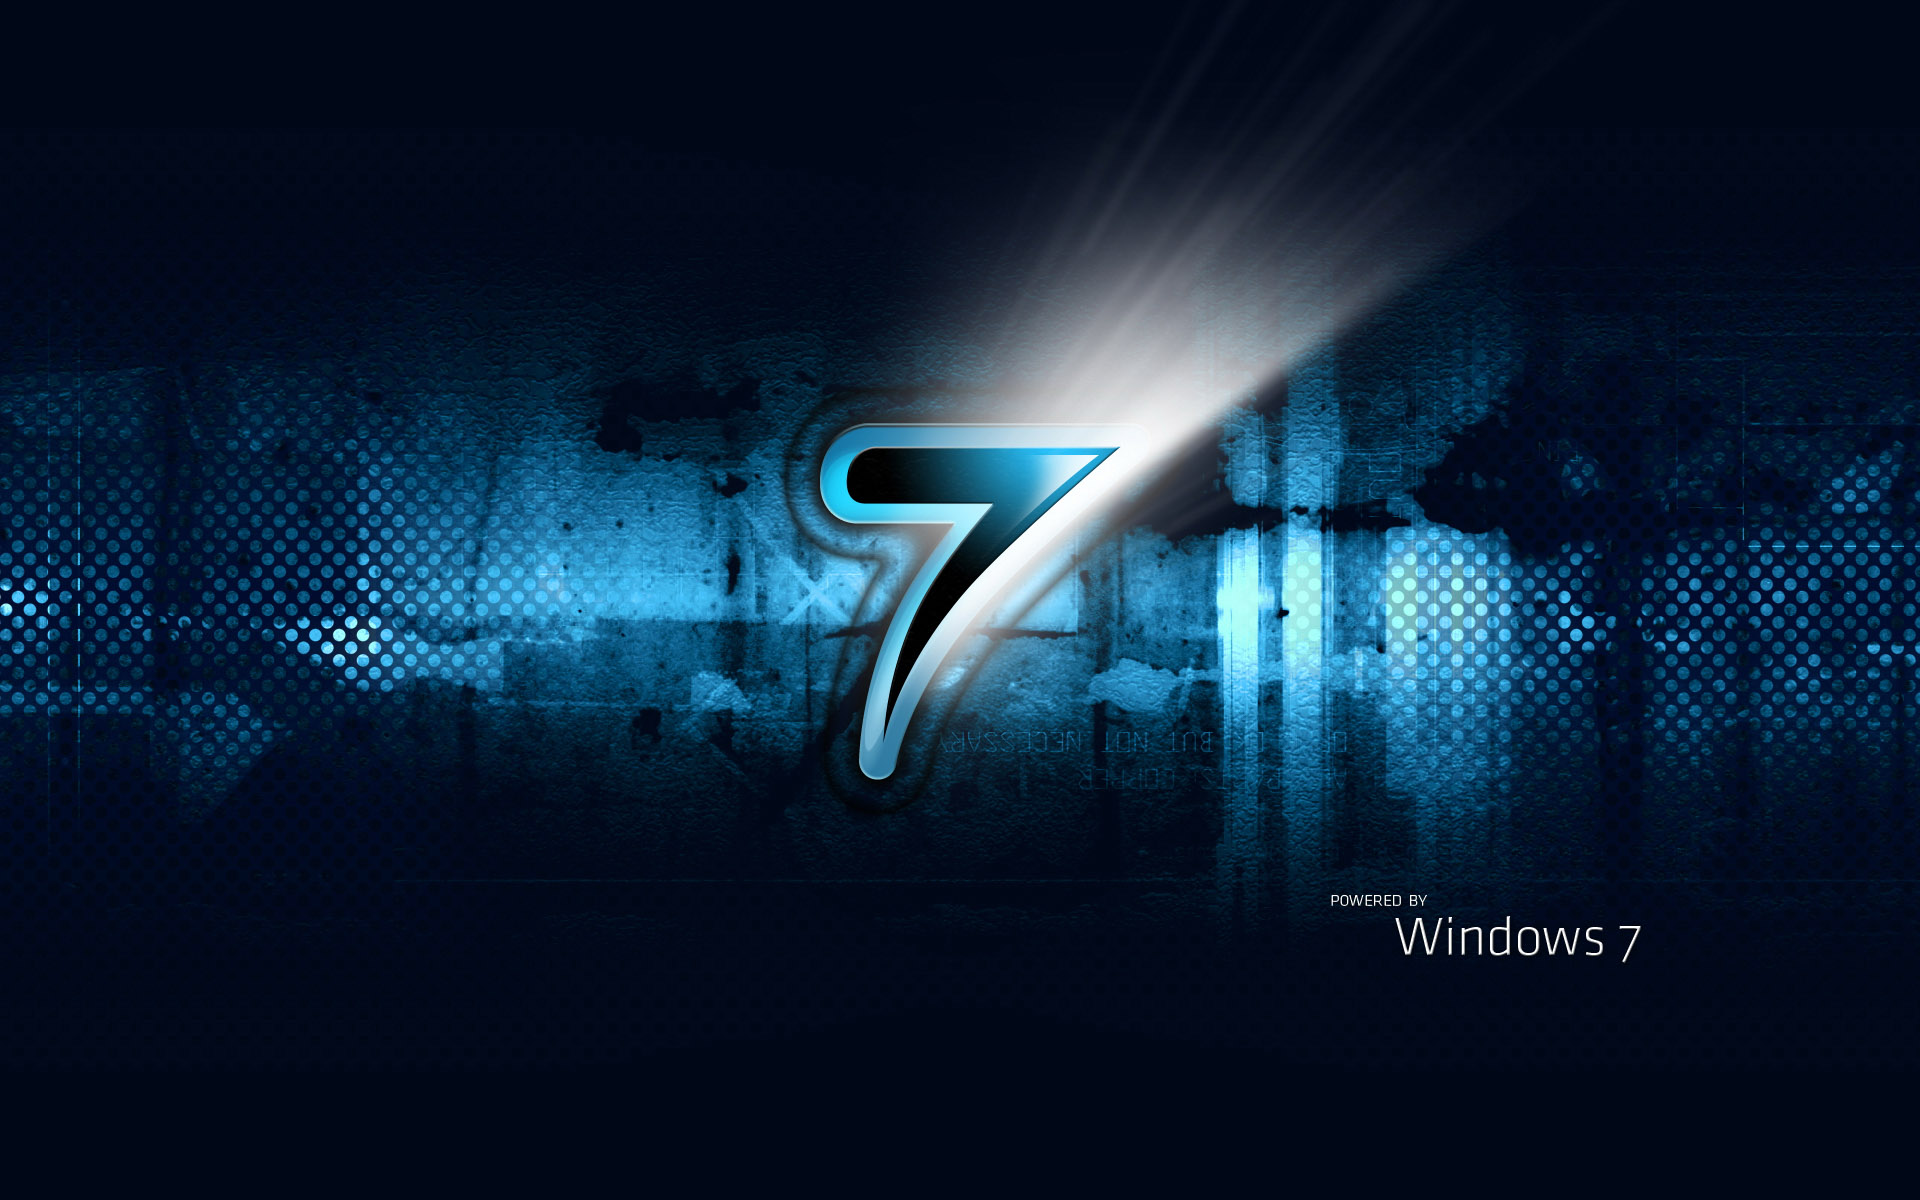 windows 7, microsoft, technology, logo, windows